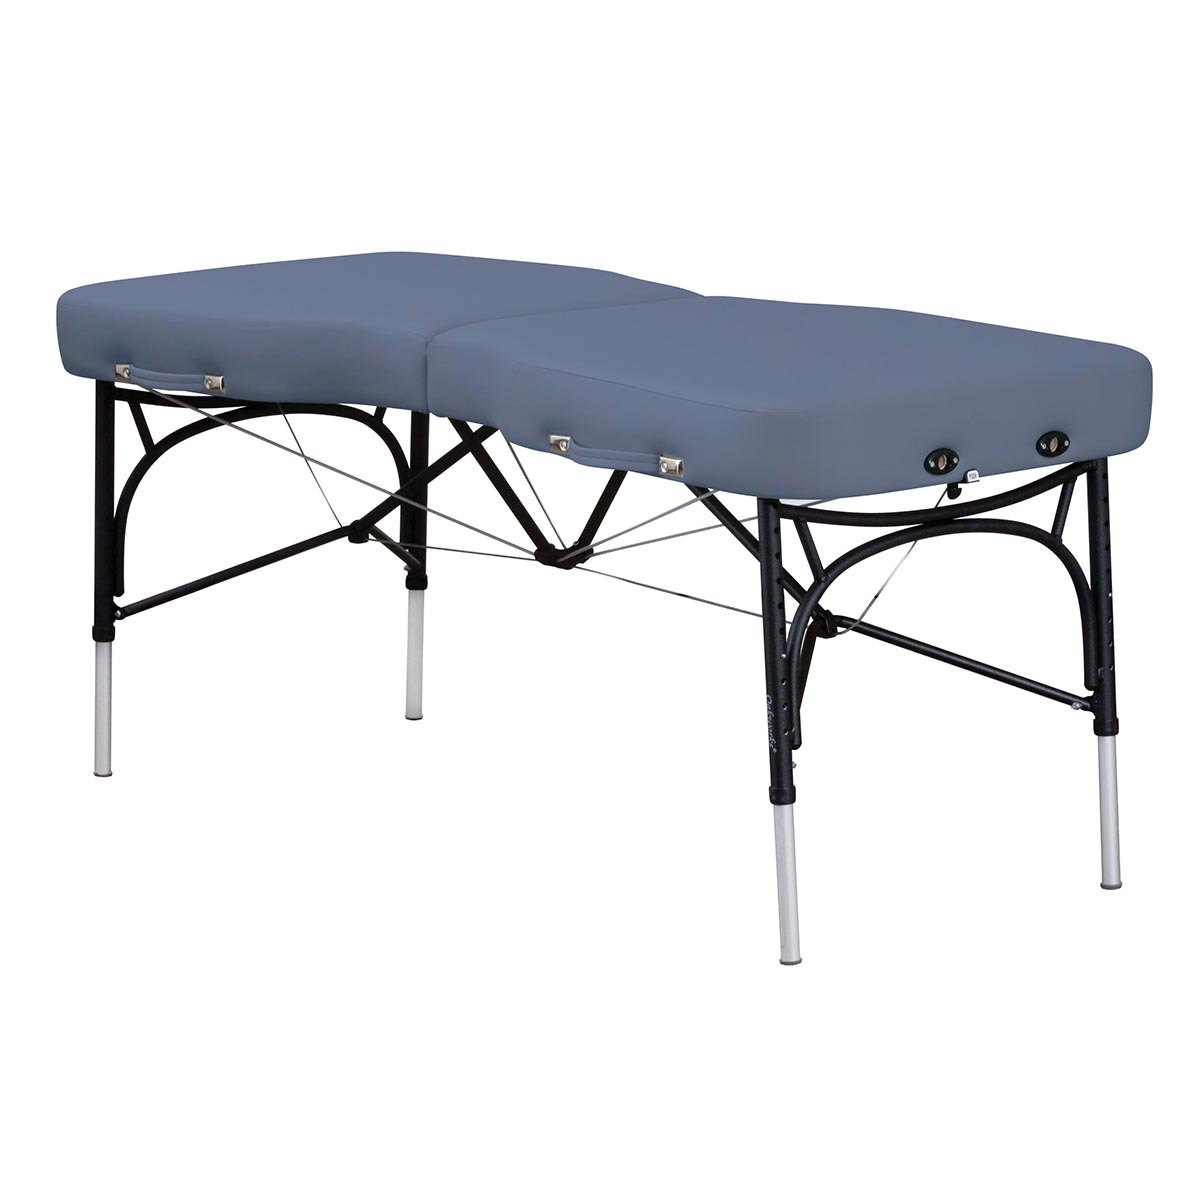 oakworks synergy massage table